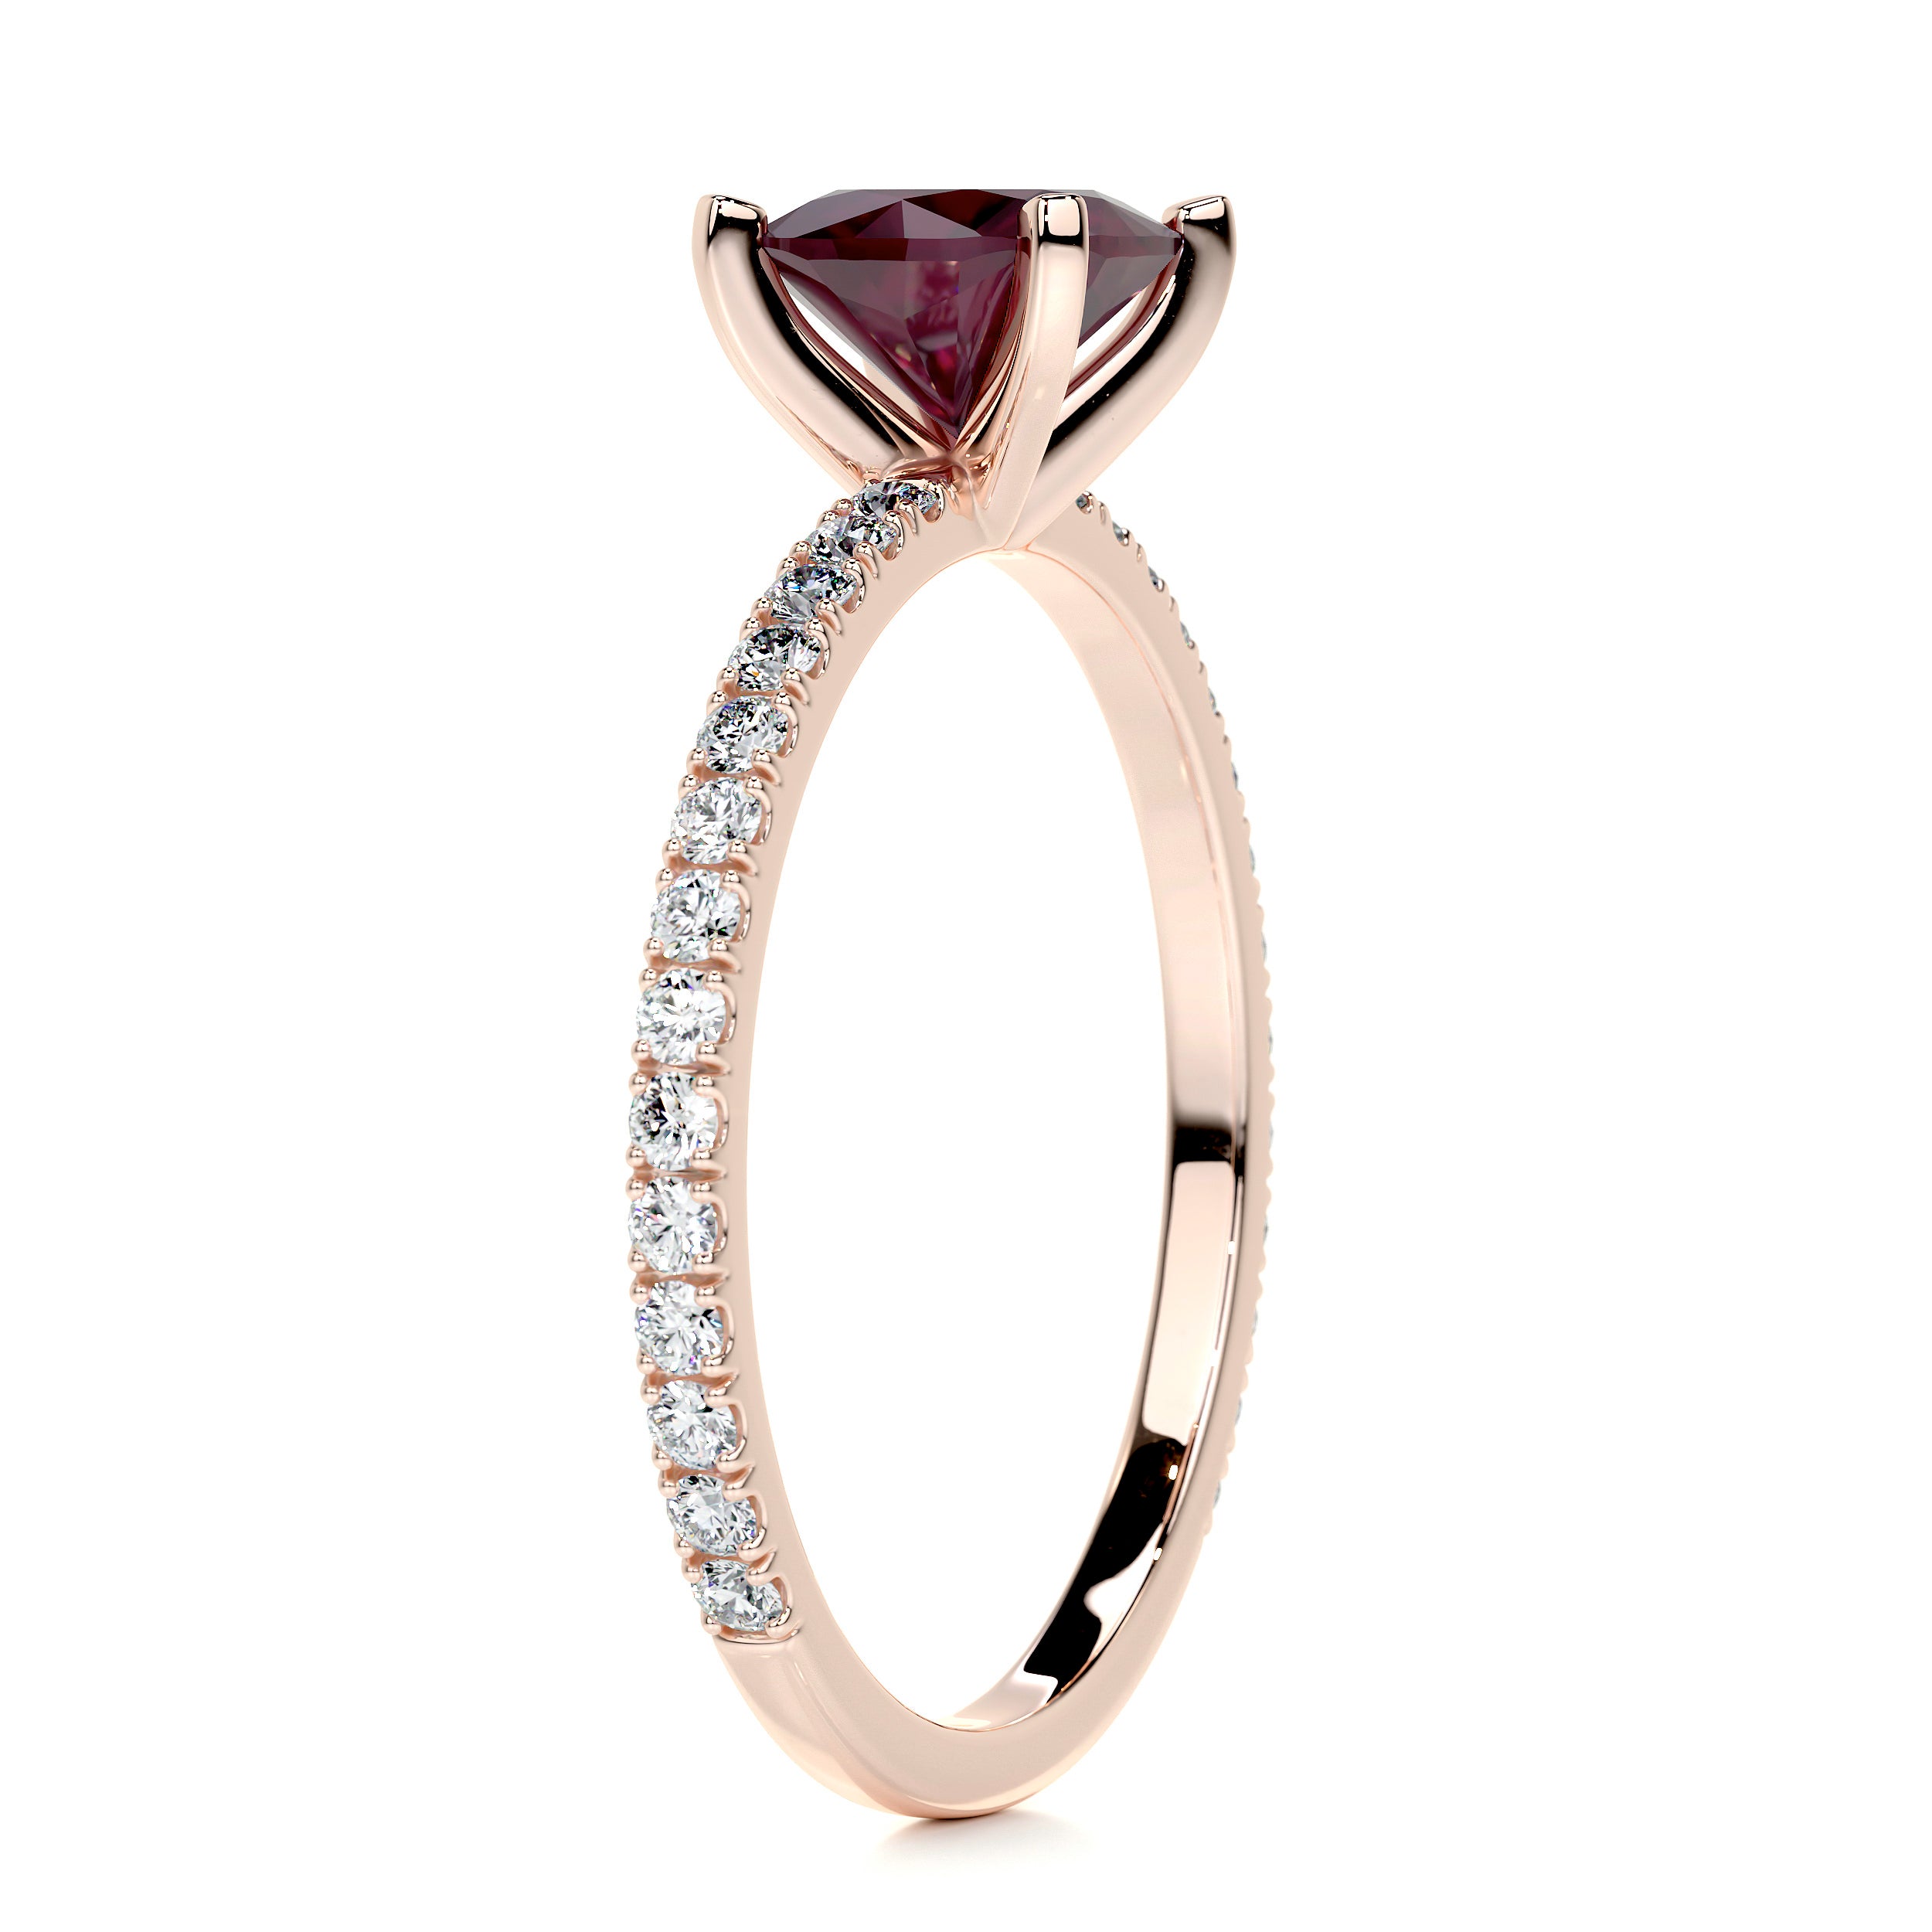 Stephanie Gemstone & Diamonds Ring   (1.8 Carat) -14K Rose Gold